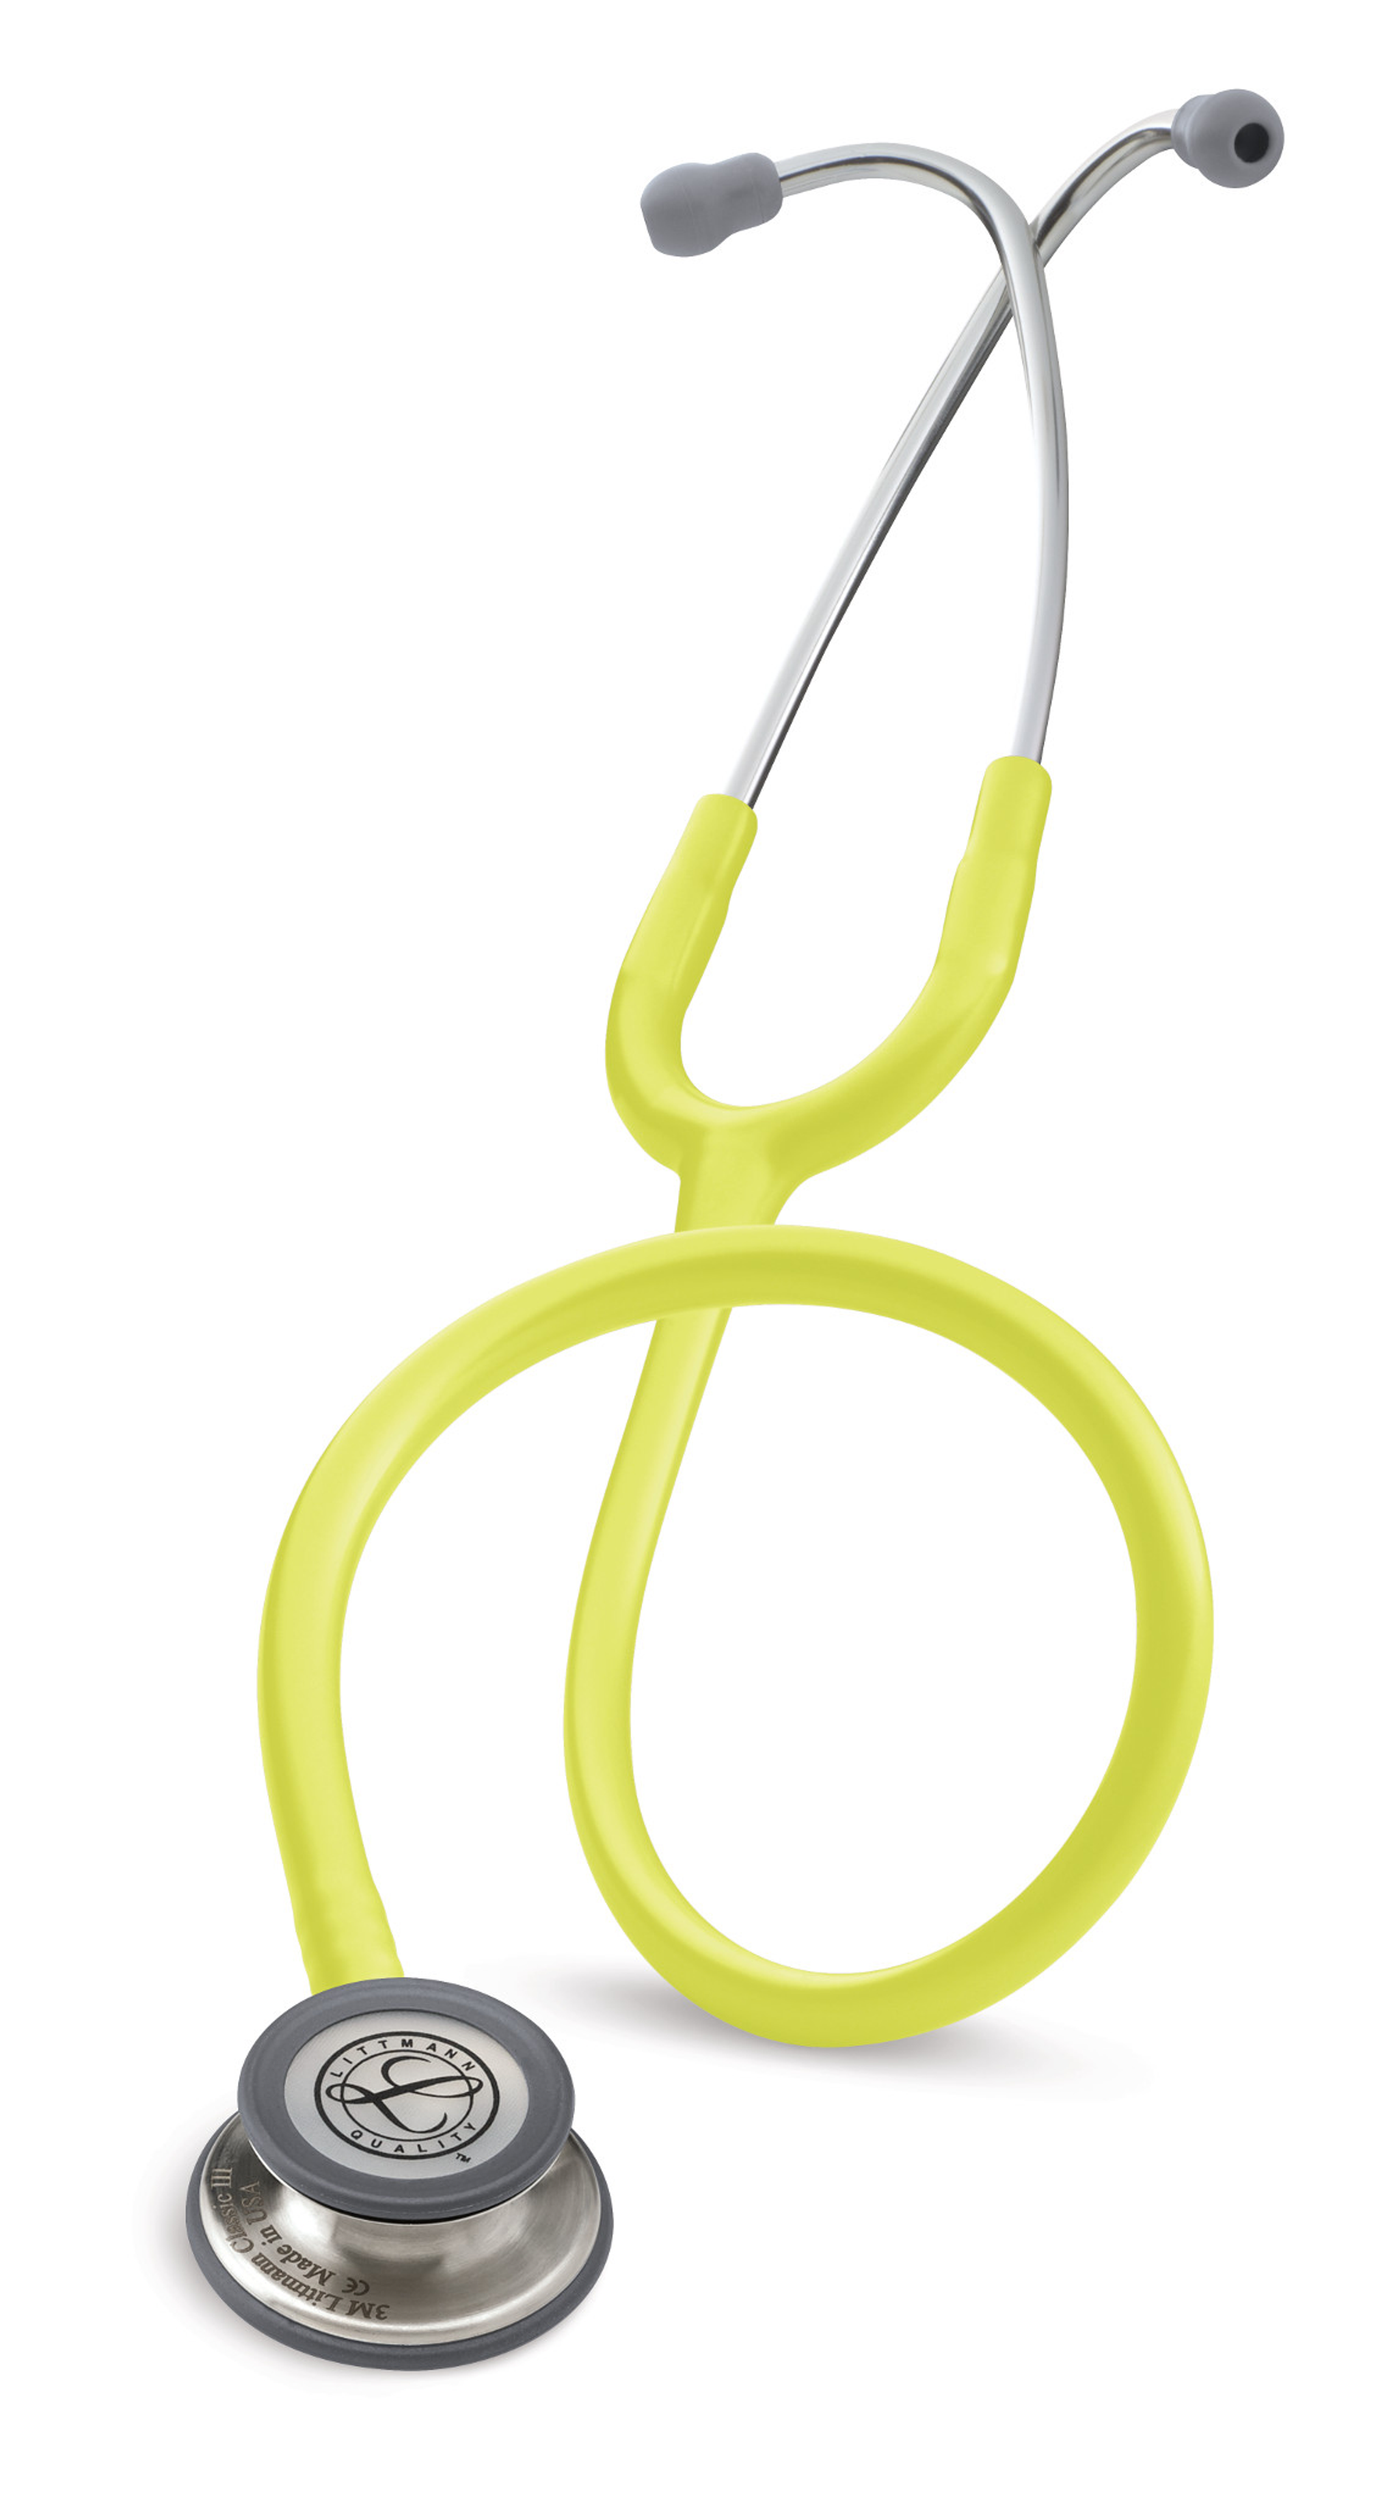 Lemon-Lime - 3M Littmann Classic III Stethoscope